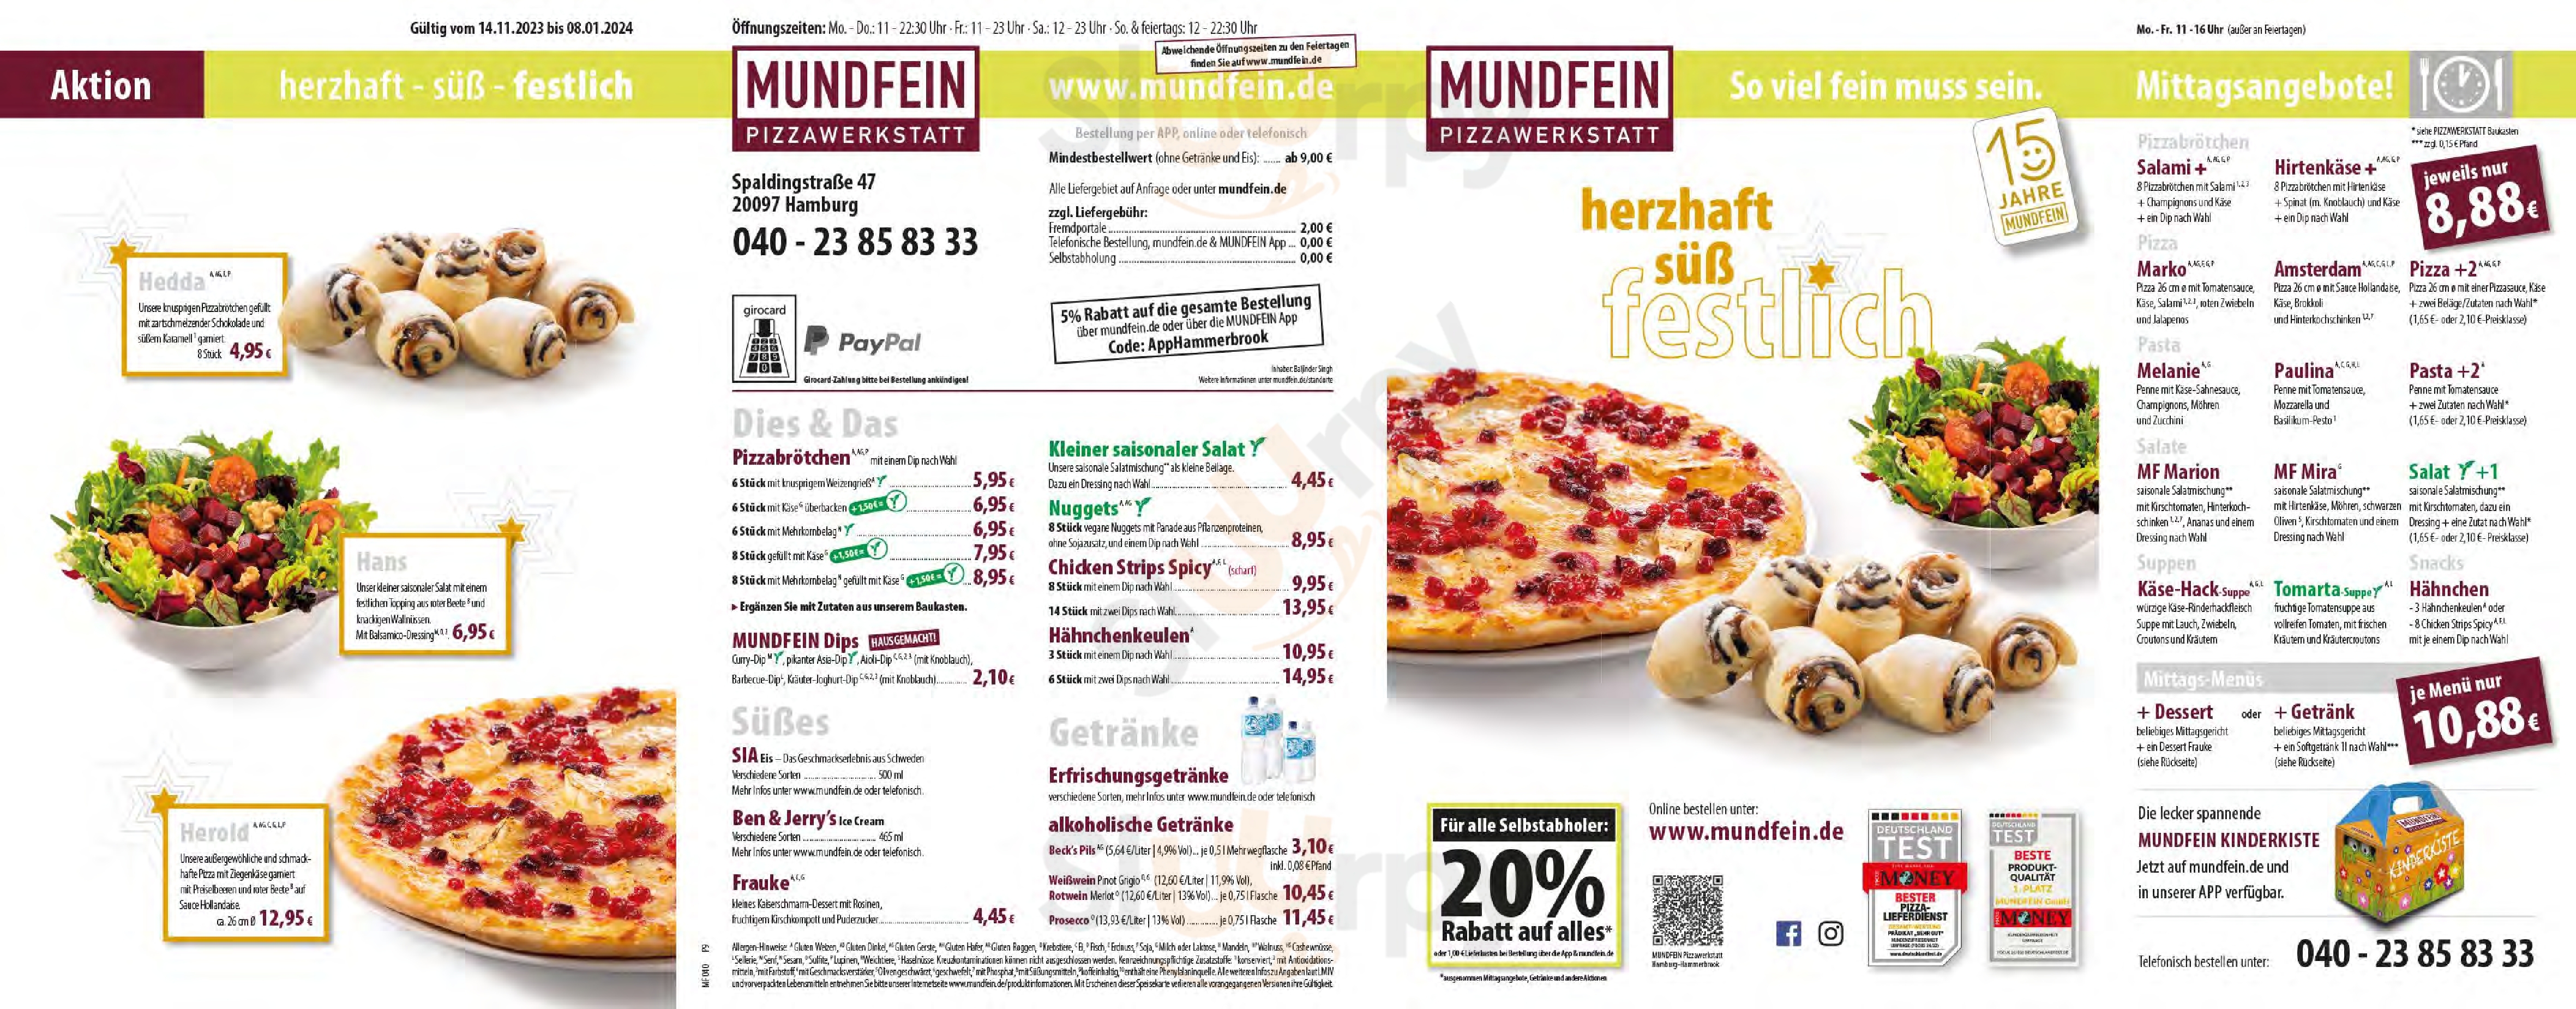 Mundfein Pizzawerkstatt Hamburg-hammerbrook Hamburg Menu - 1